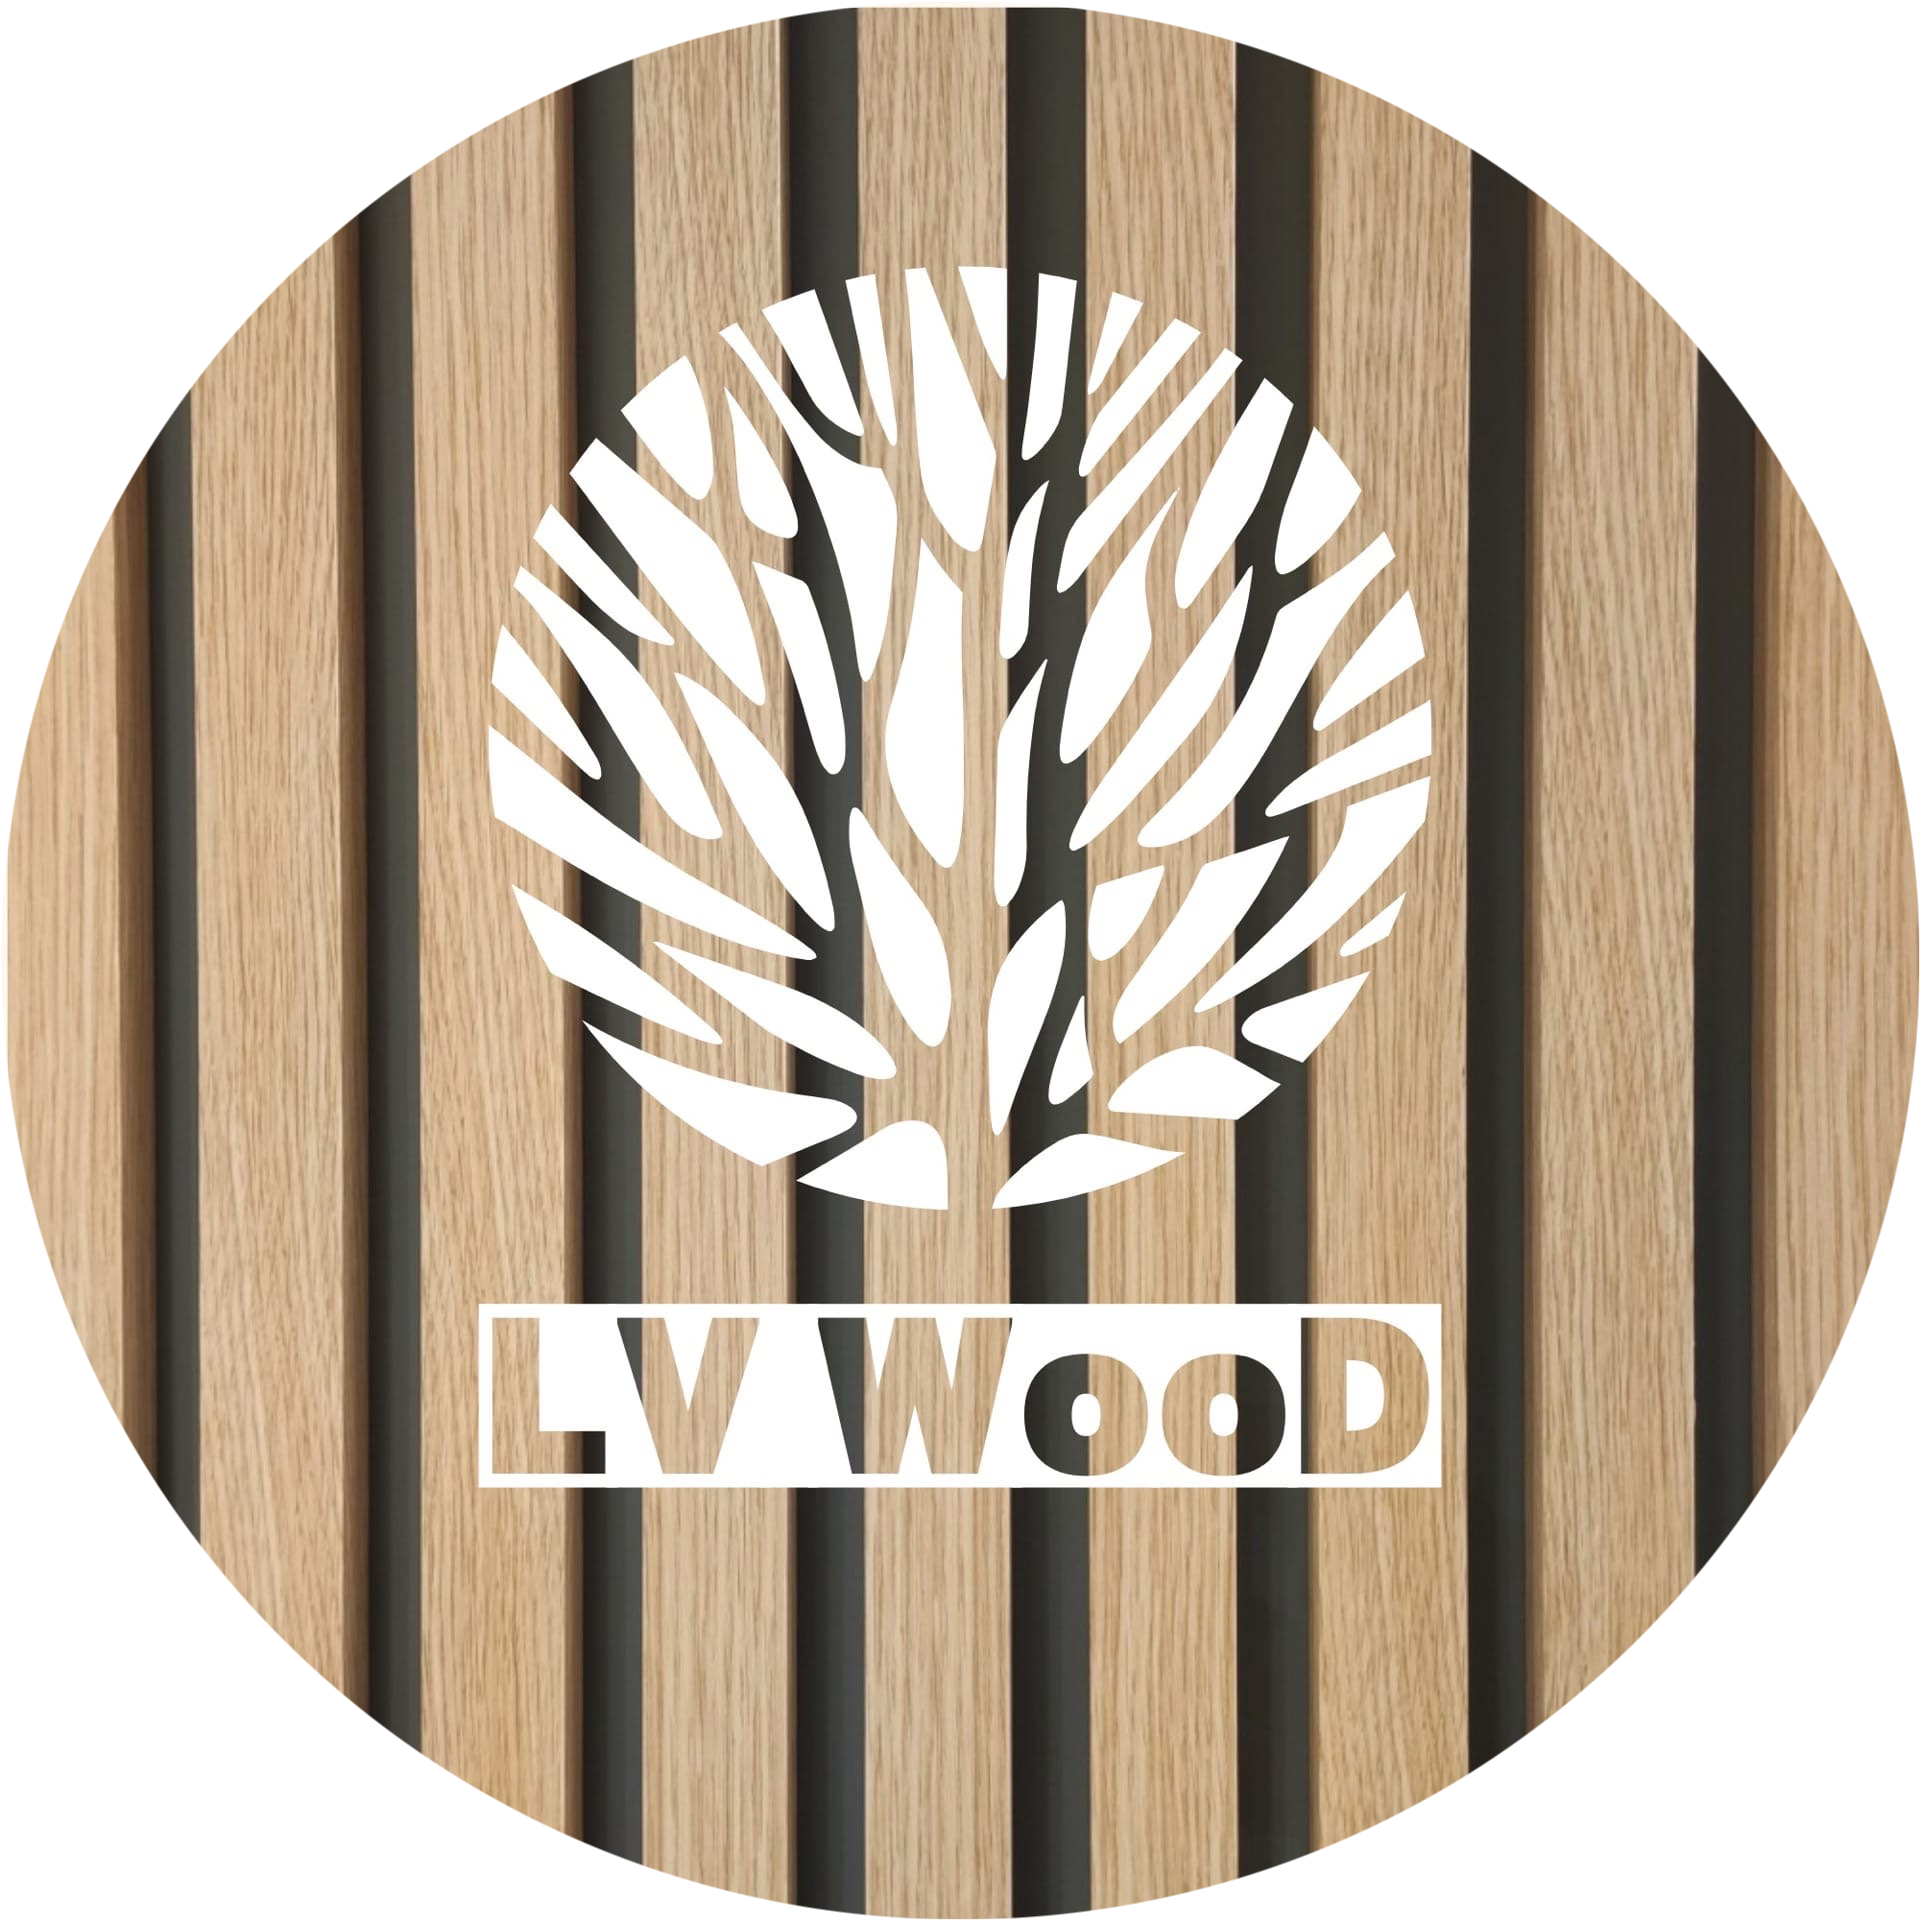 LV Wood